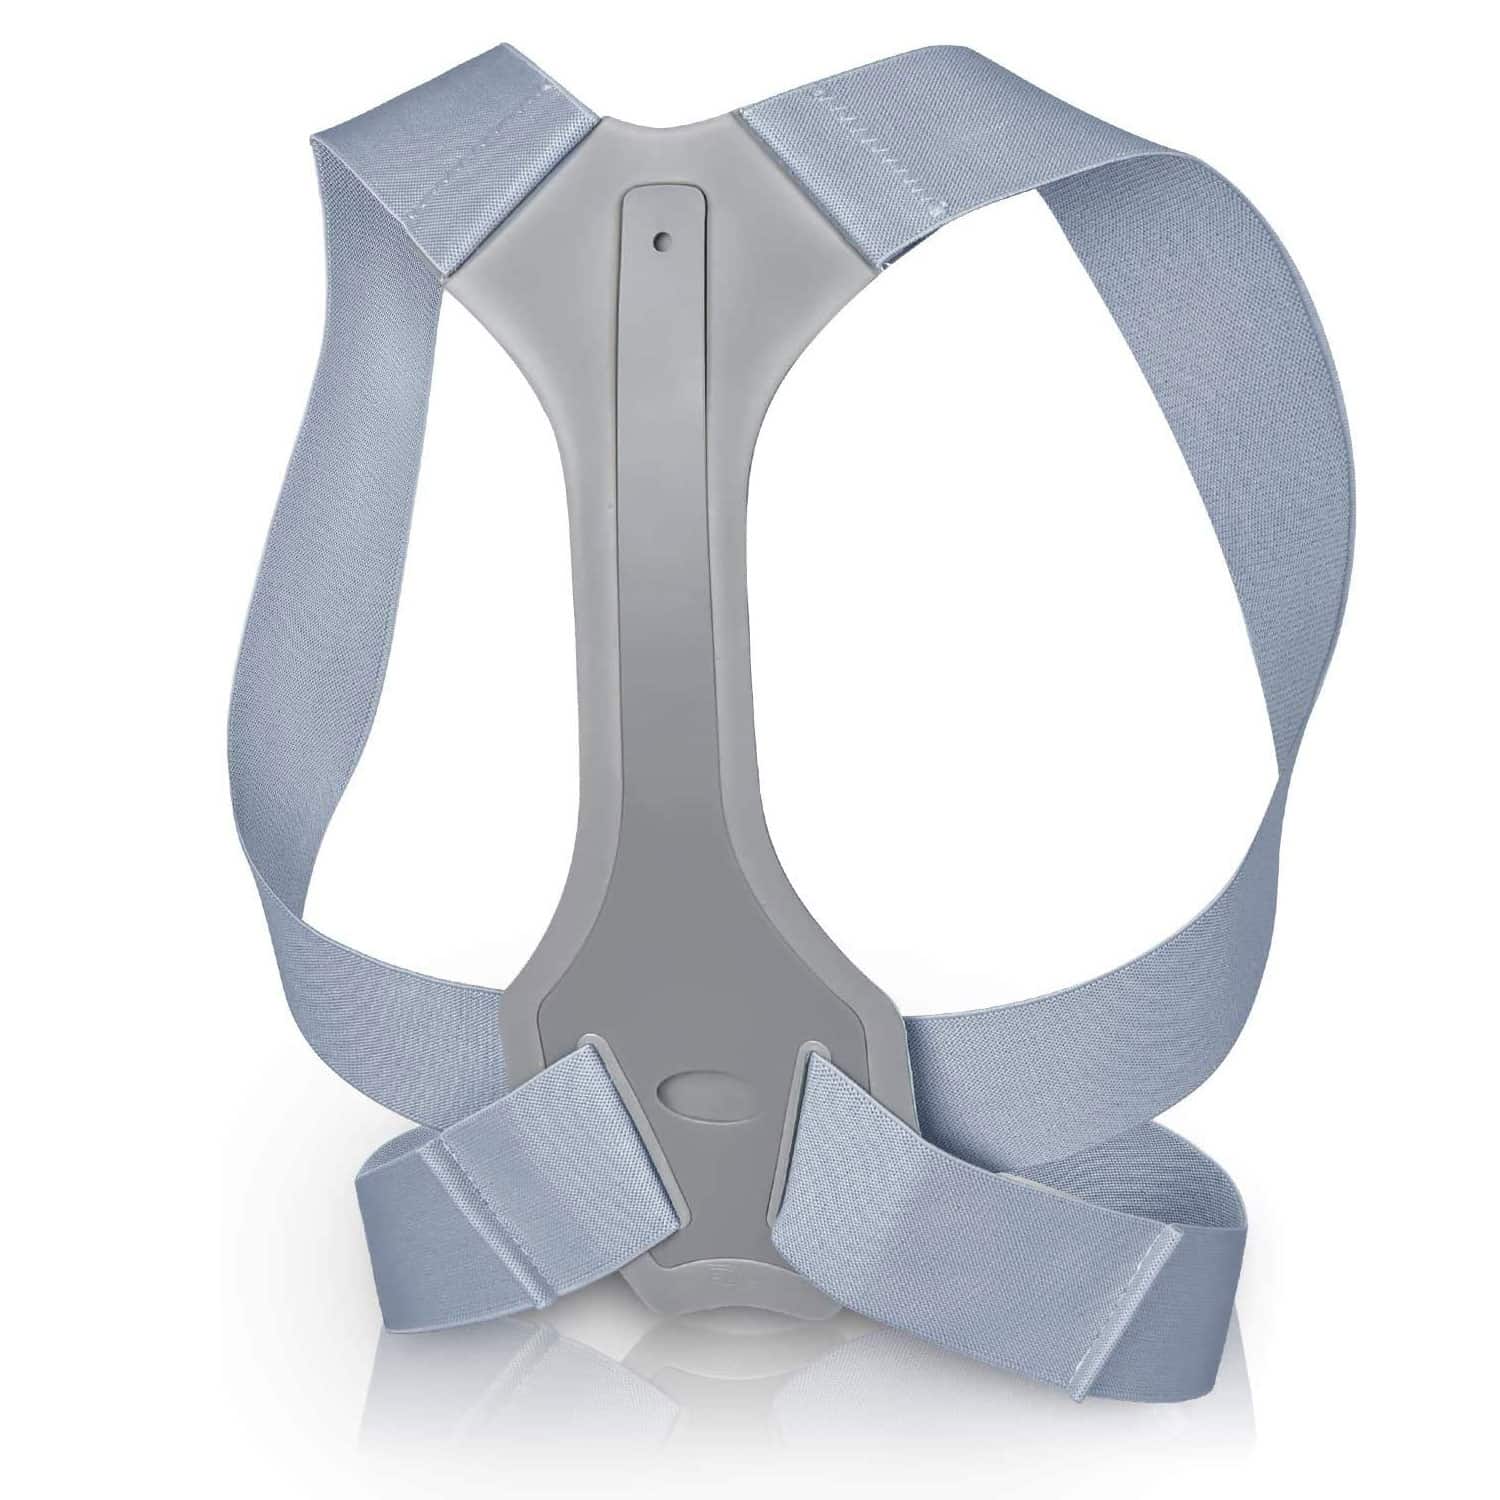 Ergonomic Adjustable Posture Corrector Back Brace Support